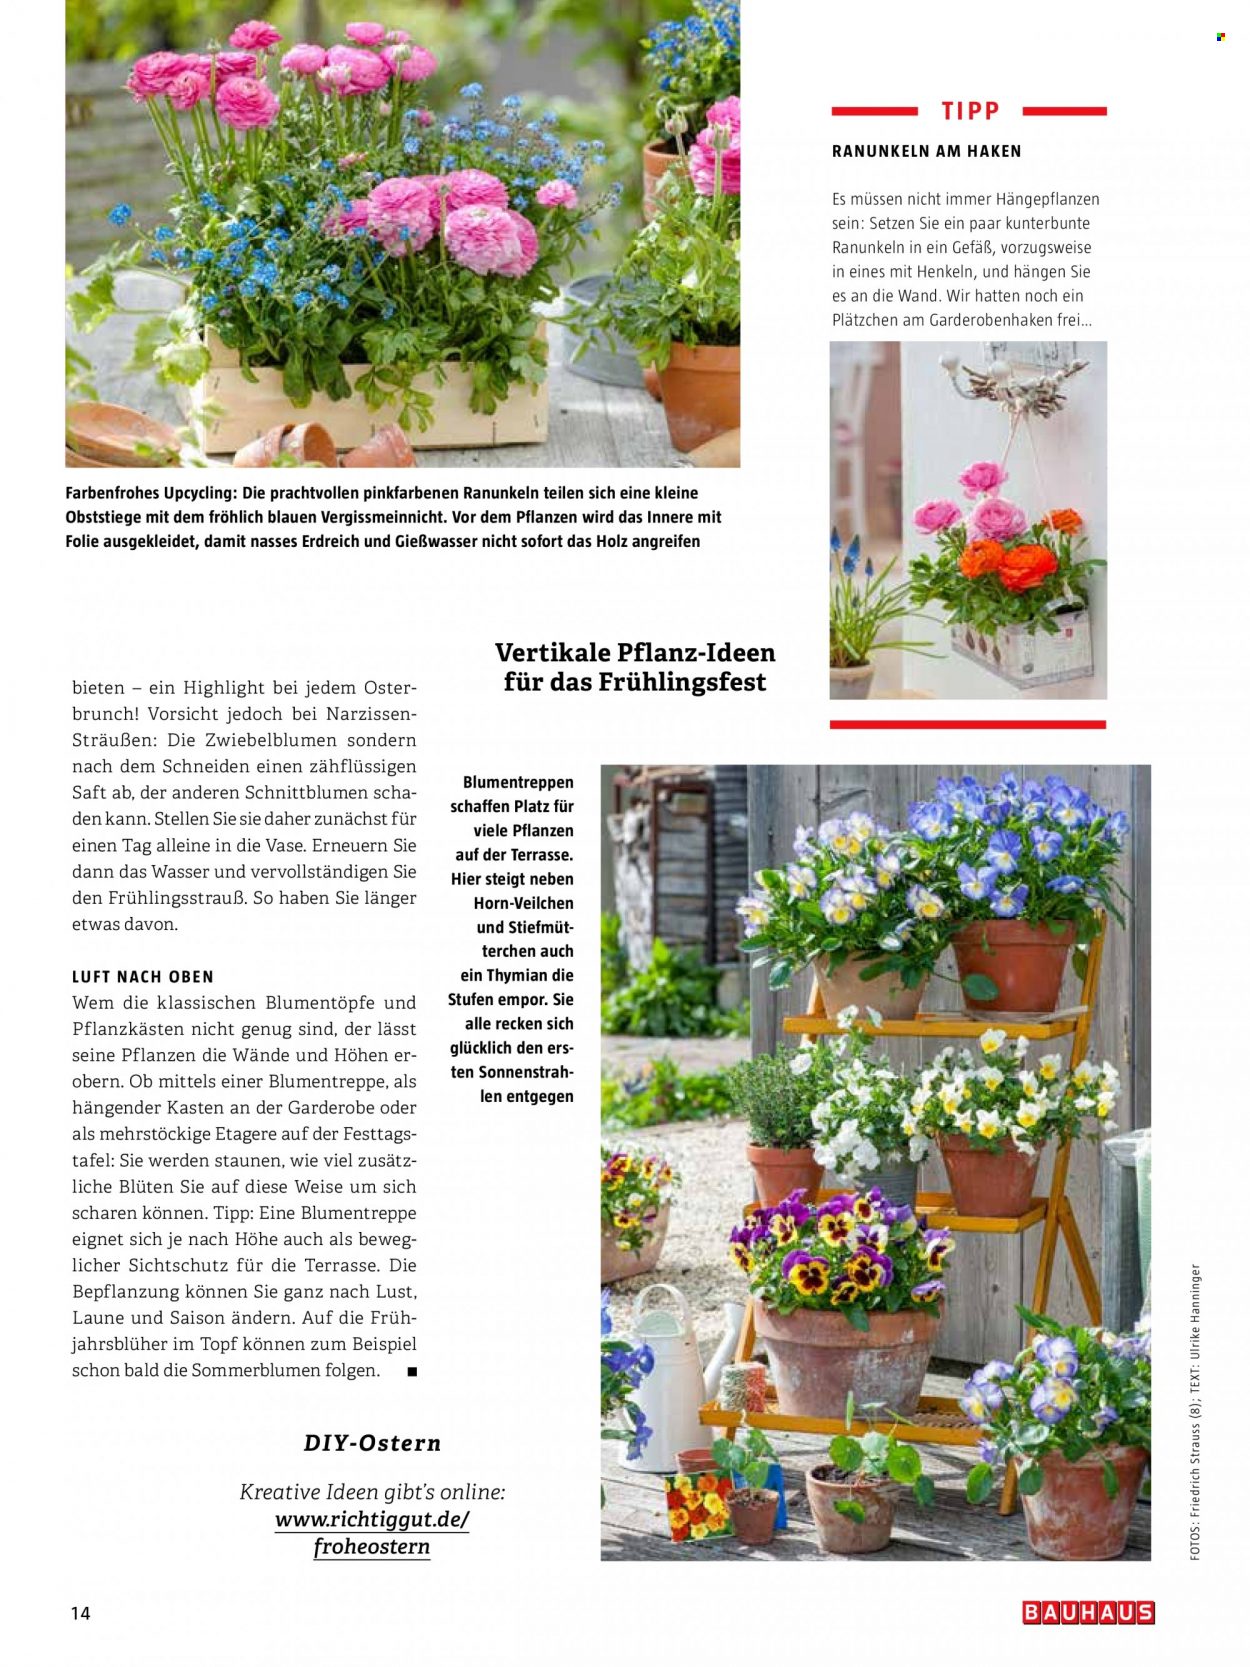 thumbnail - Prospekte Bauhaus - Produkte in Aktion - Etagere, Garderobe, Vase, Holz, Narzissen, Blumenstrauß, Pflanzkasten, Blumentreppe. Seite 14.